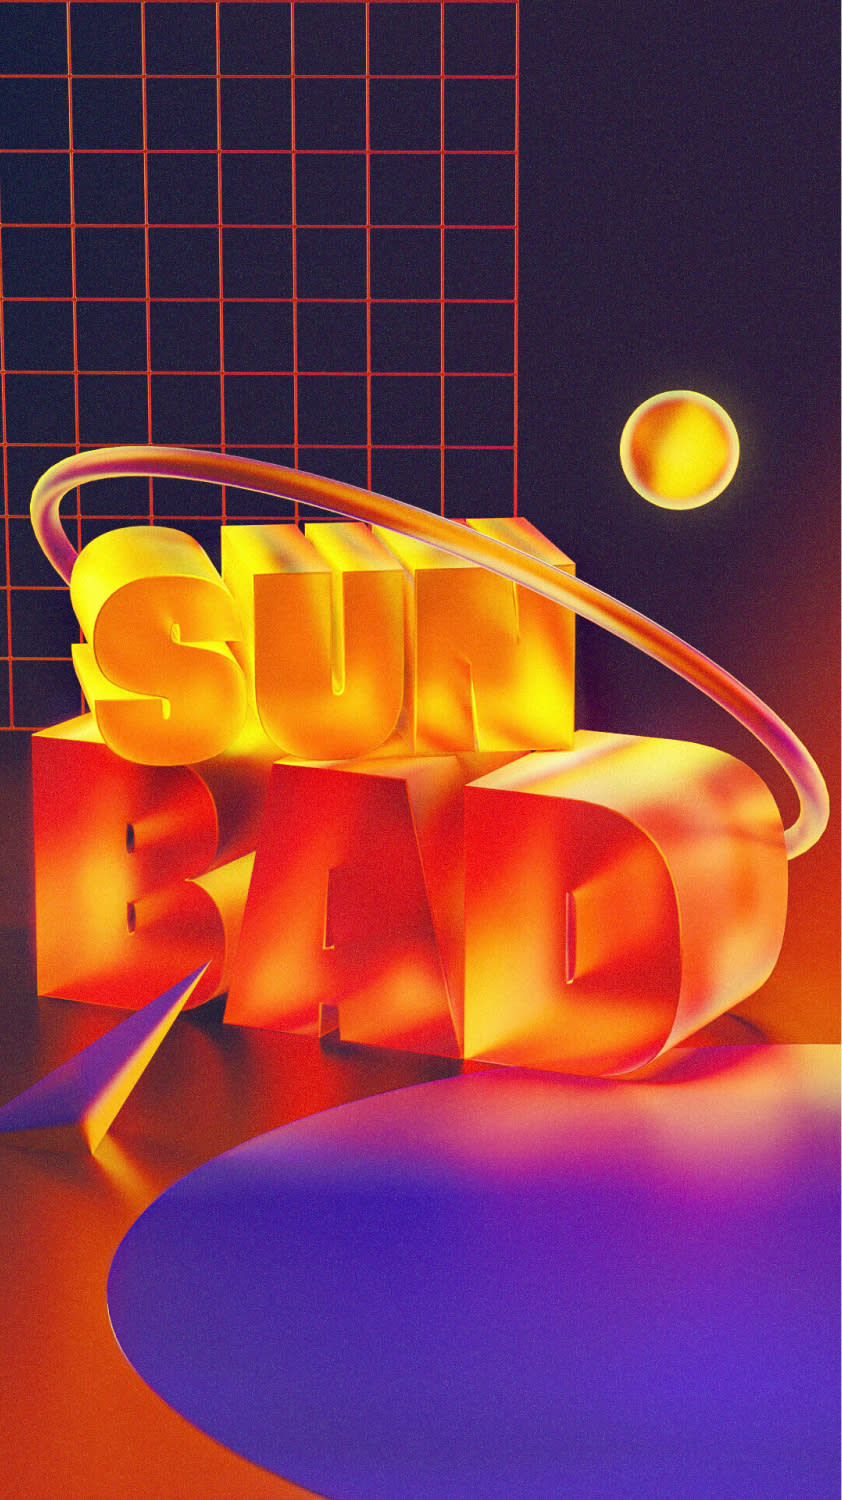 MoonPie - Sun Bad graphic